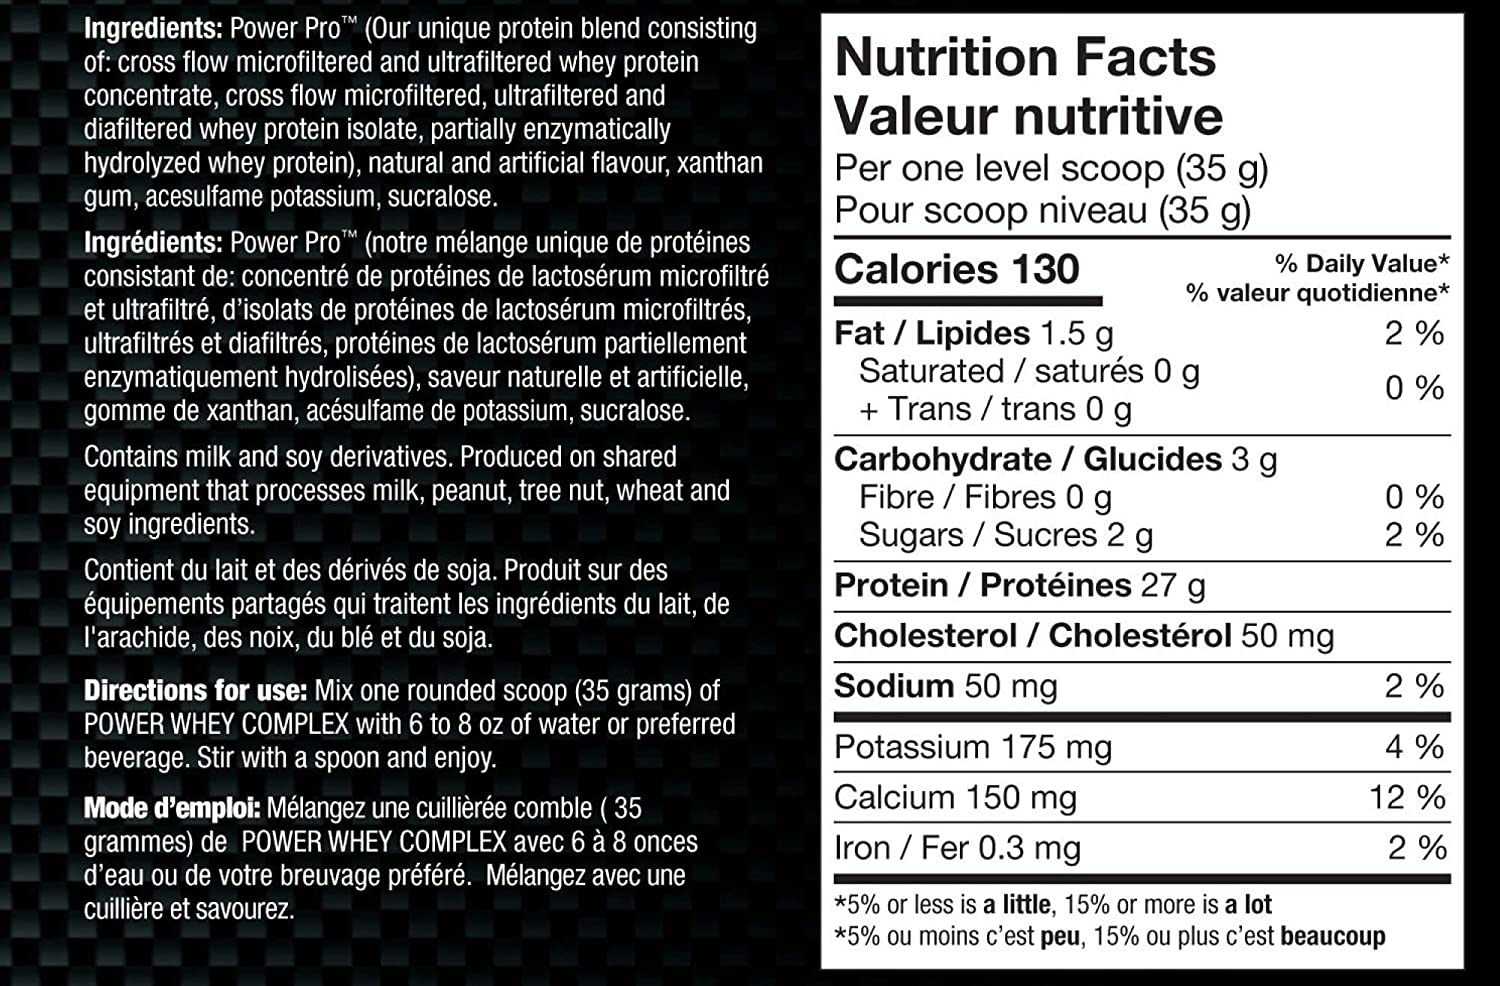 BioX Power Whey Complex Protein 2.27kg (Chocolate Caramel Fudge)